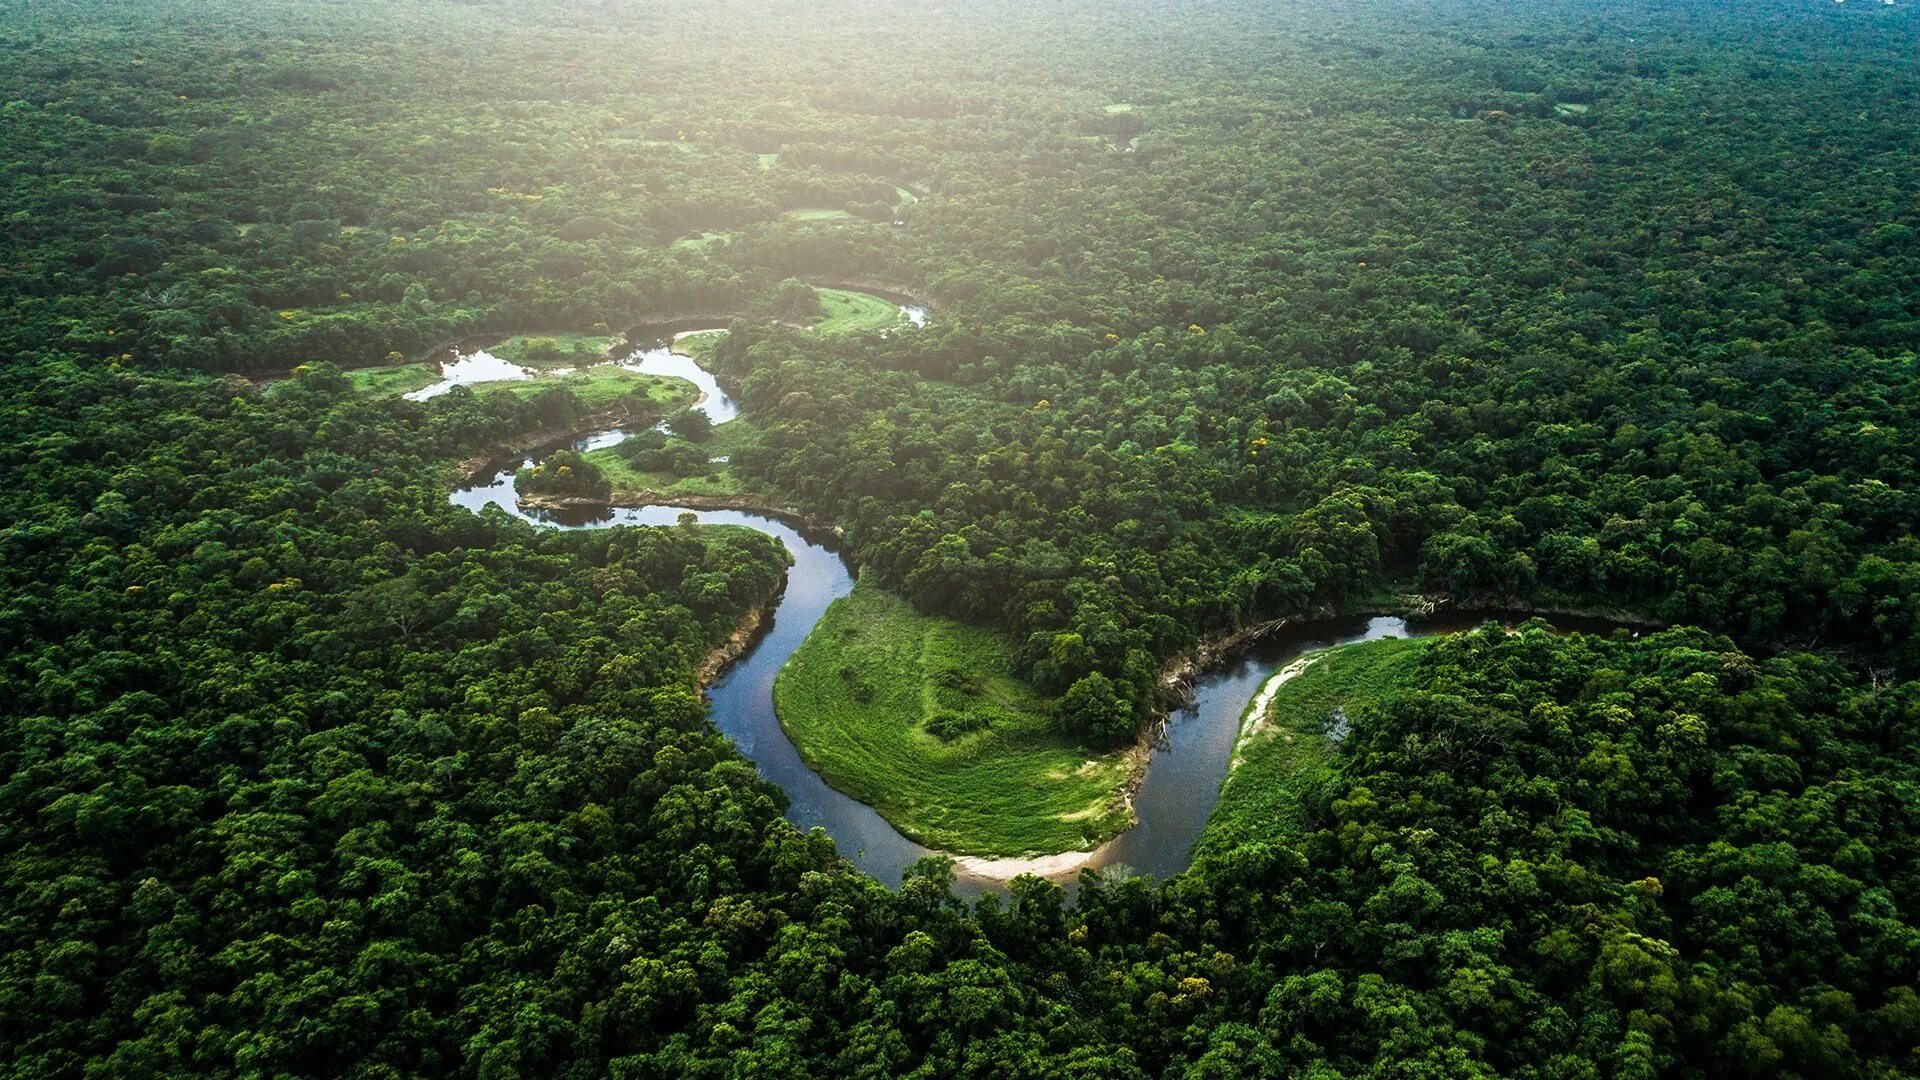 Бразилия тропические леса Сельва. Сельва амазонки, Южная Америка. Река Амазонка в Бразилии. Тропические леса амазонки в Бразилии. Самая большая река в бразилии